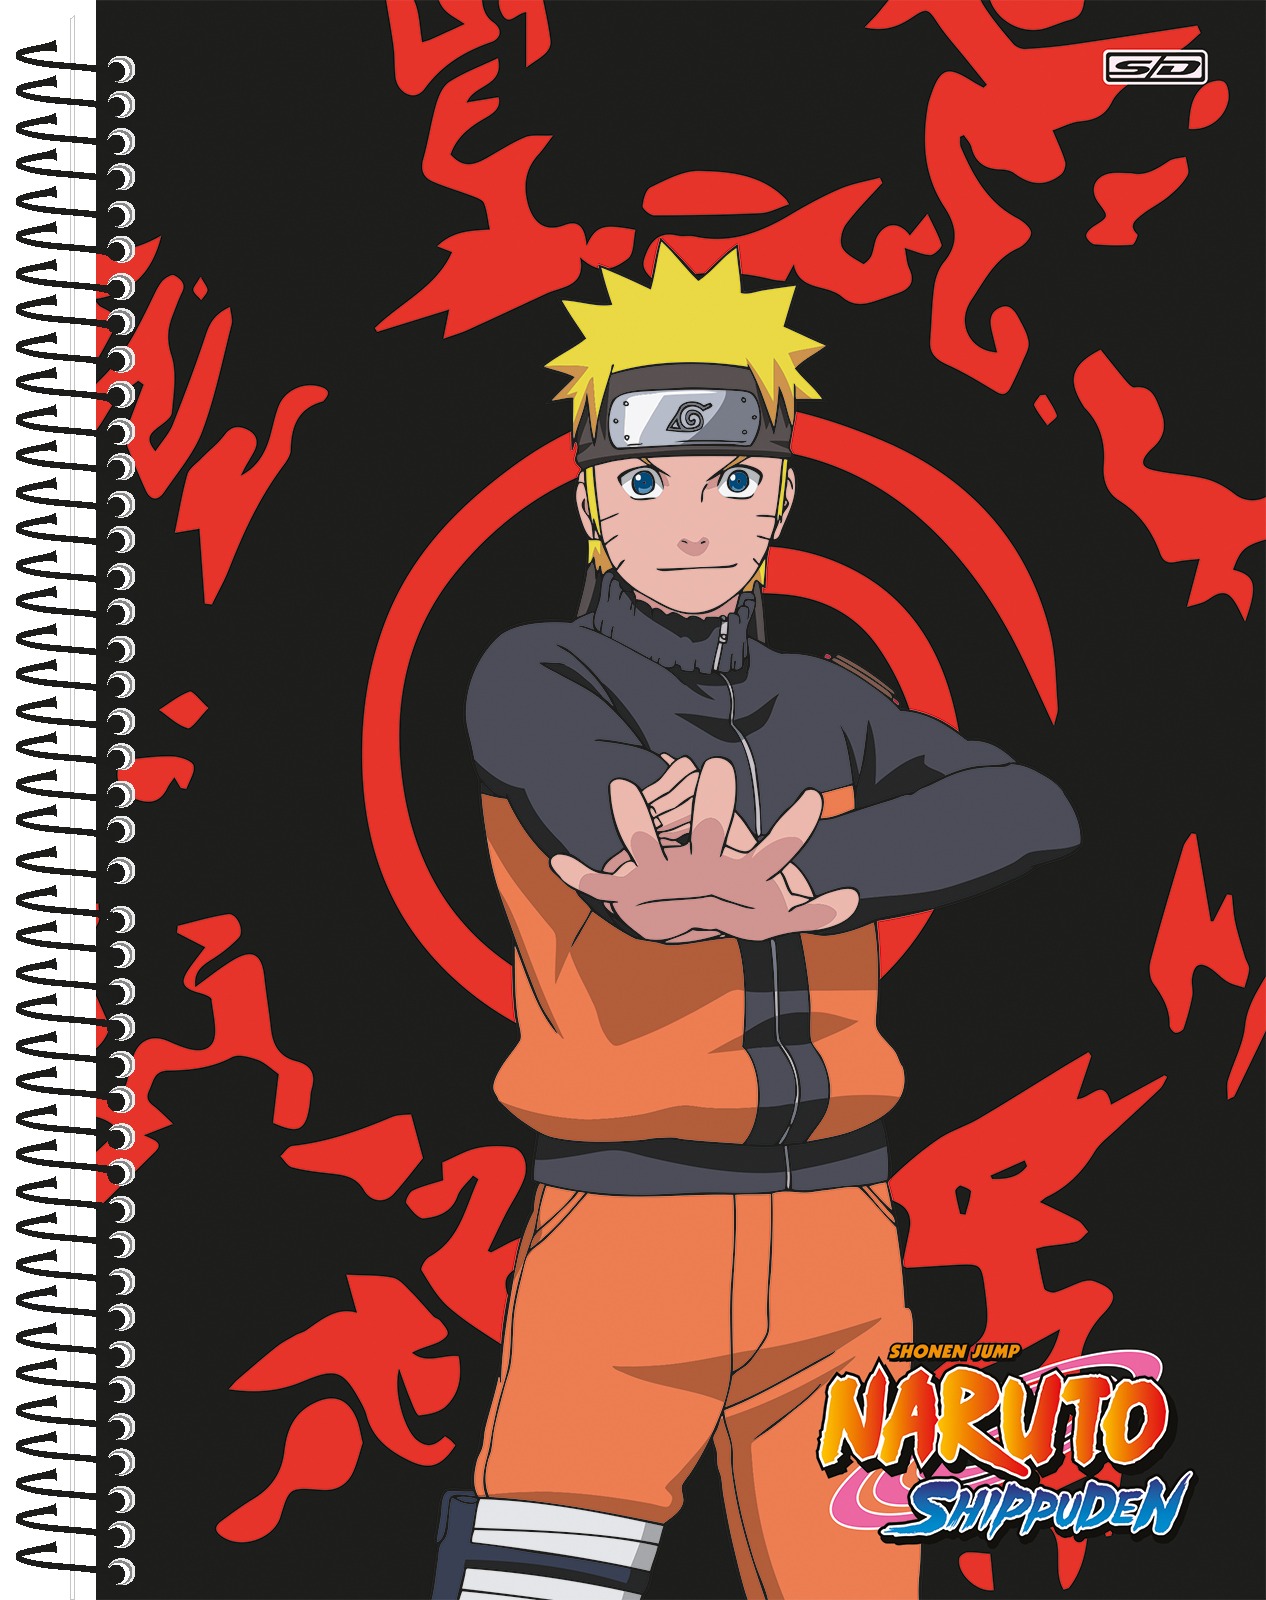 Caderno de Desenho Cartográfia Espiral Anime Naruto 1 Matéria 60